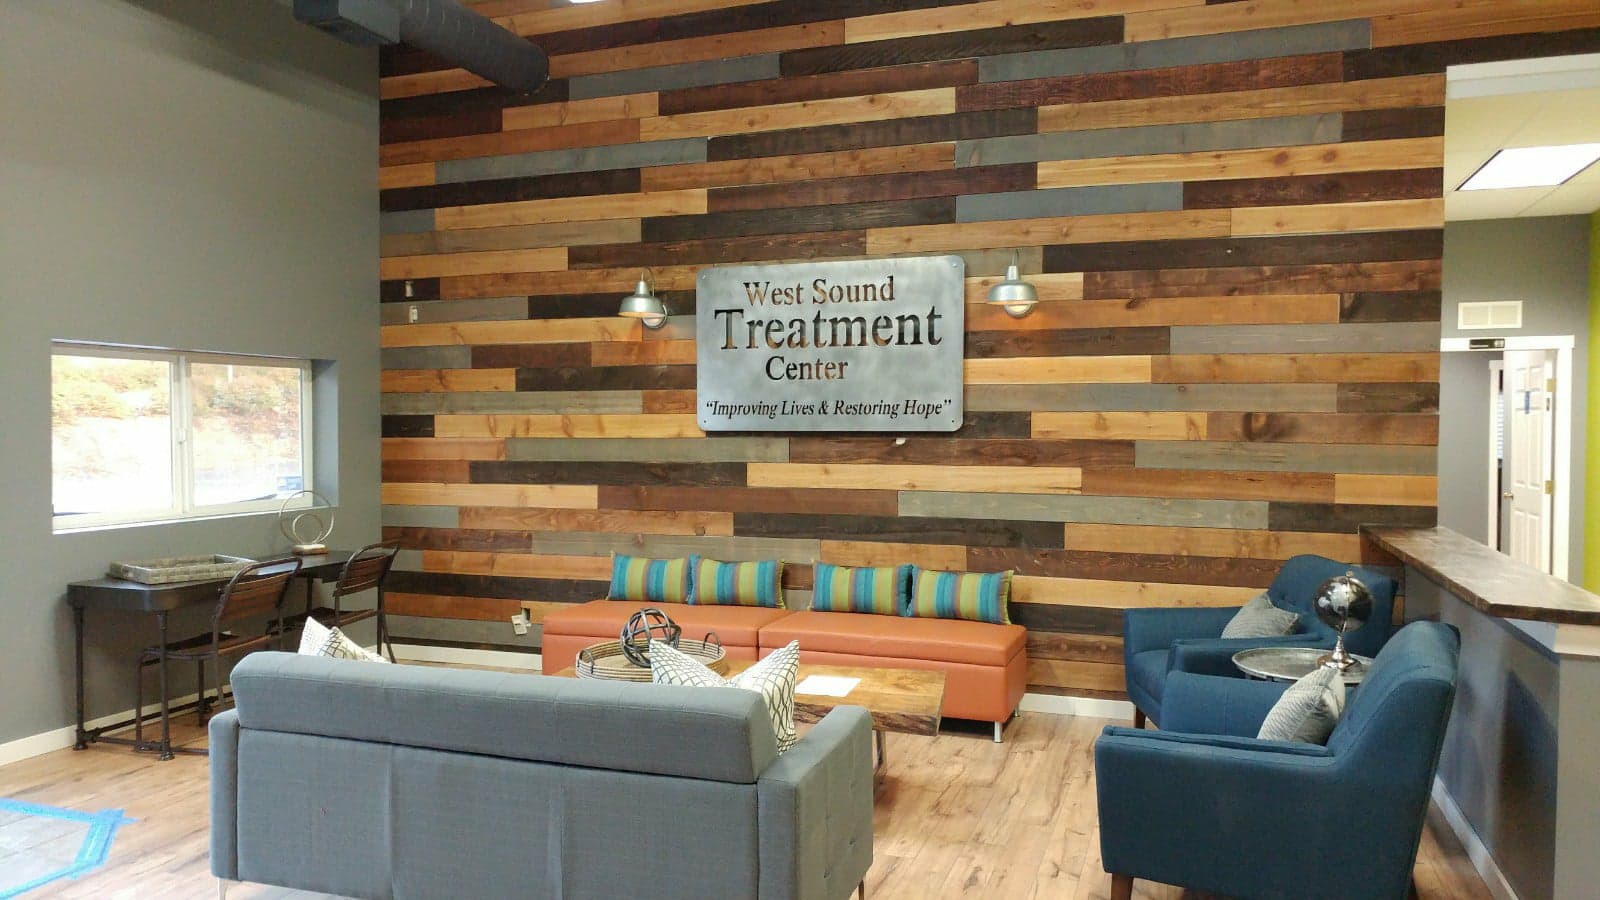 West Sound Treatment Center